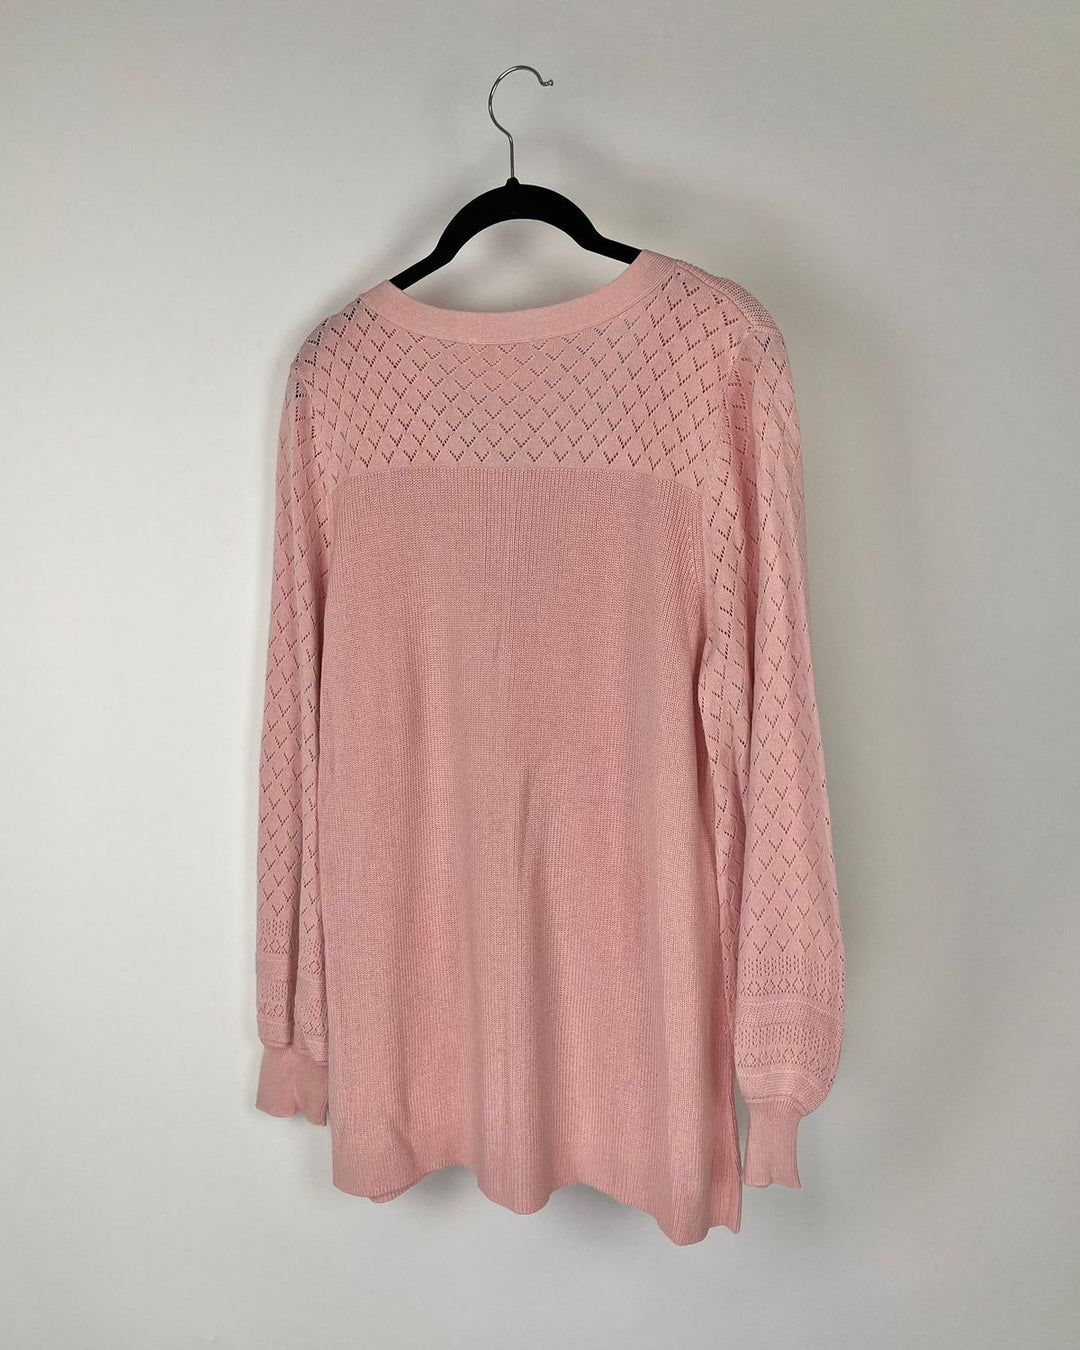 Light Pink Button Sweater - Size 14-16